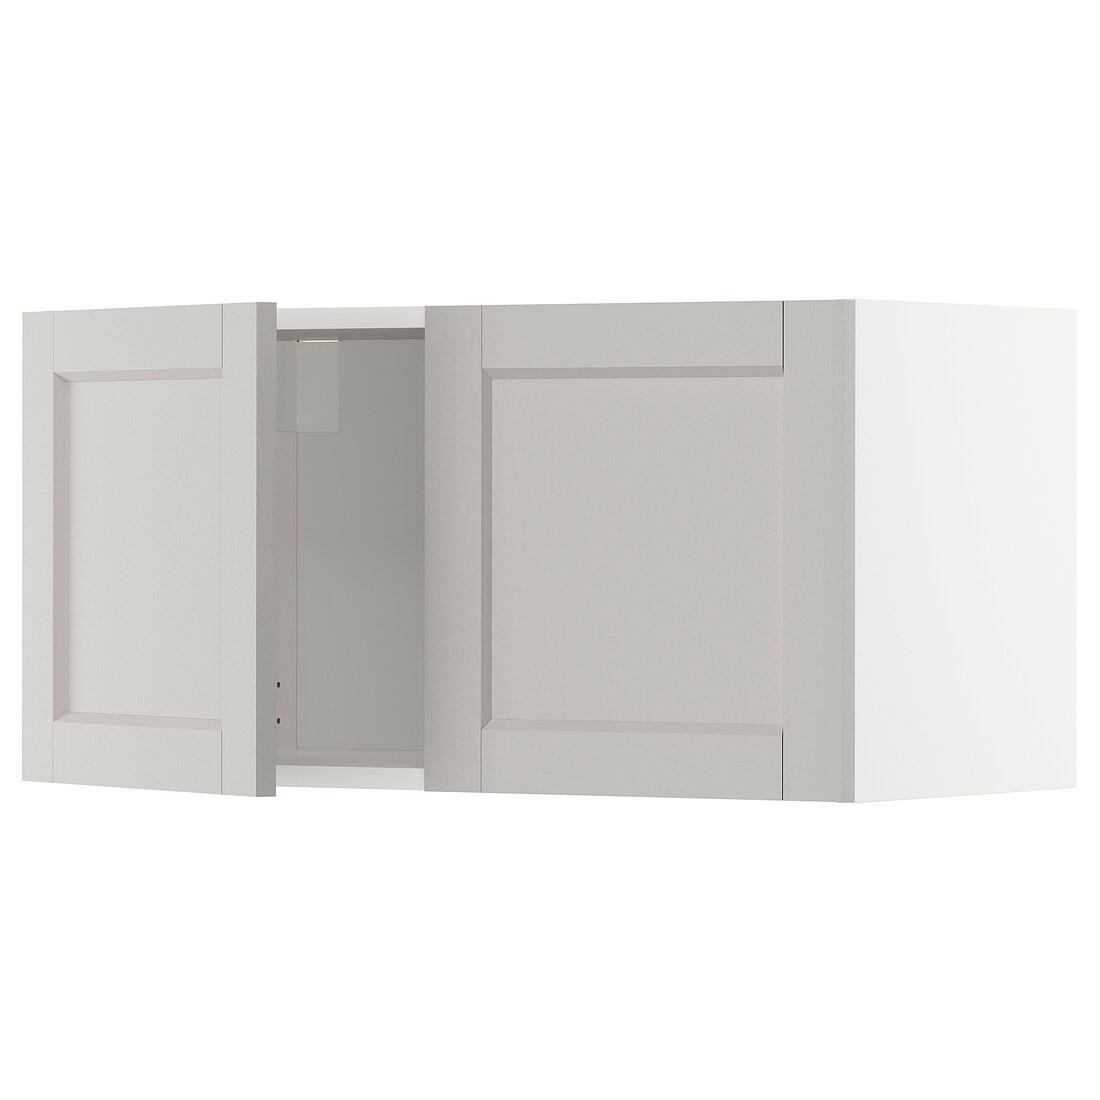 METOD МЕТОД Навесной шкаф с 2 дверями, белый / Lerhyttan светло-серый, 80x40 см